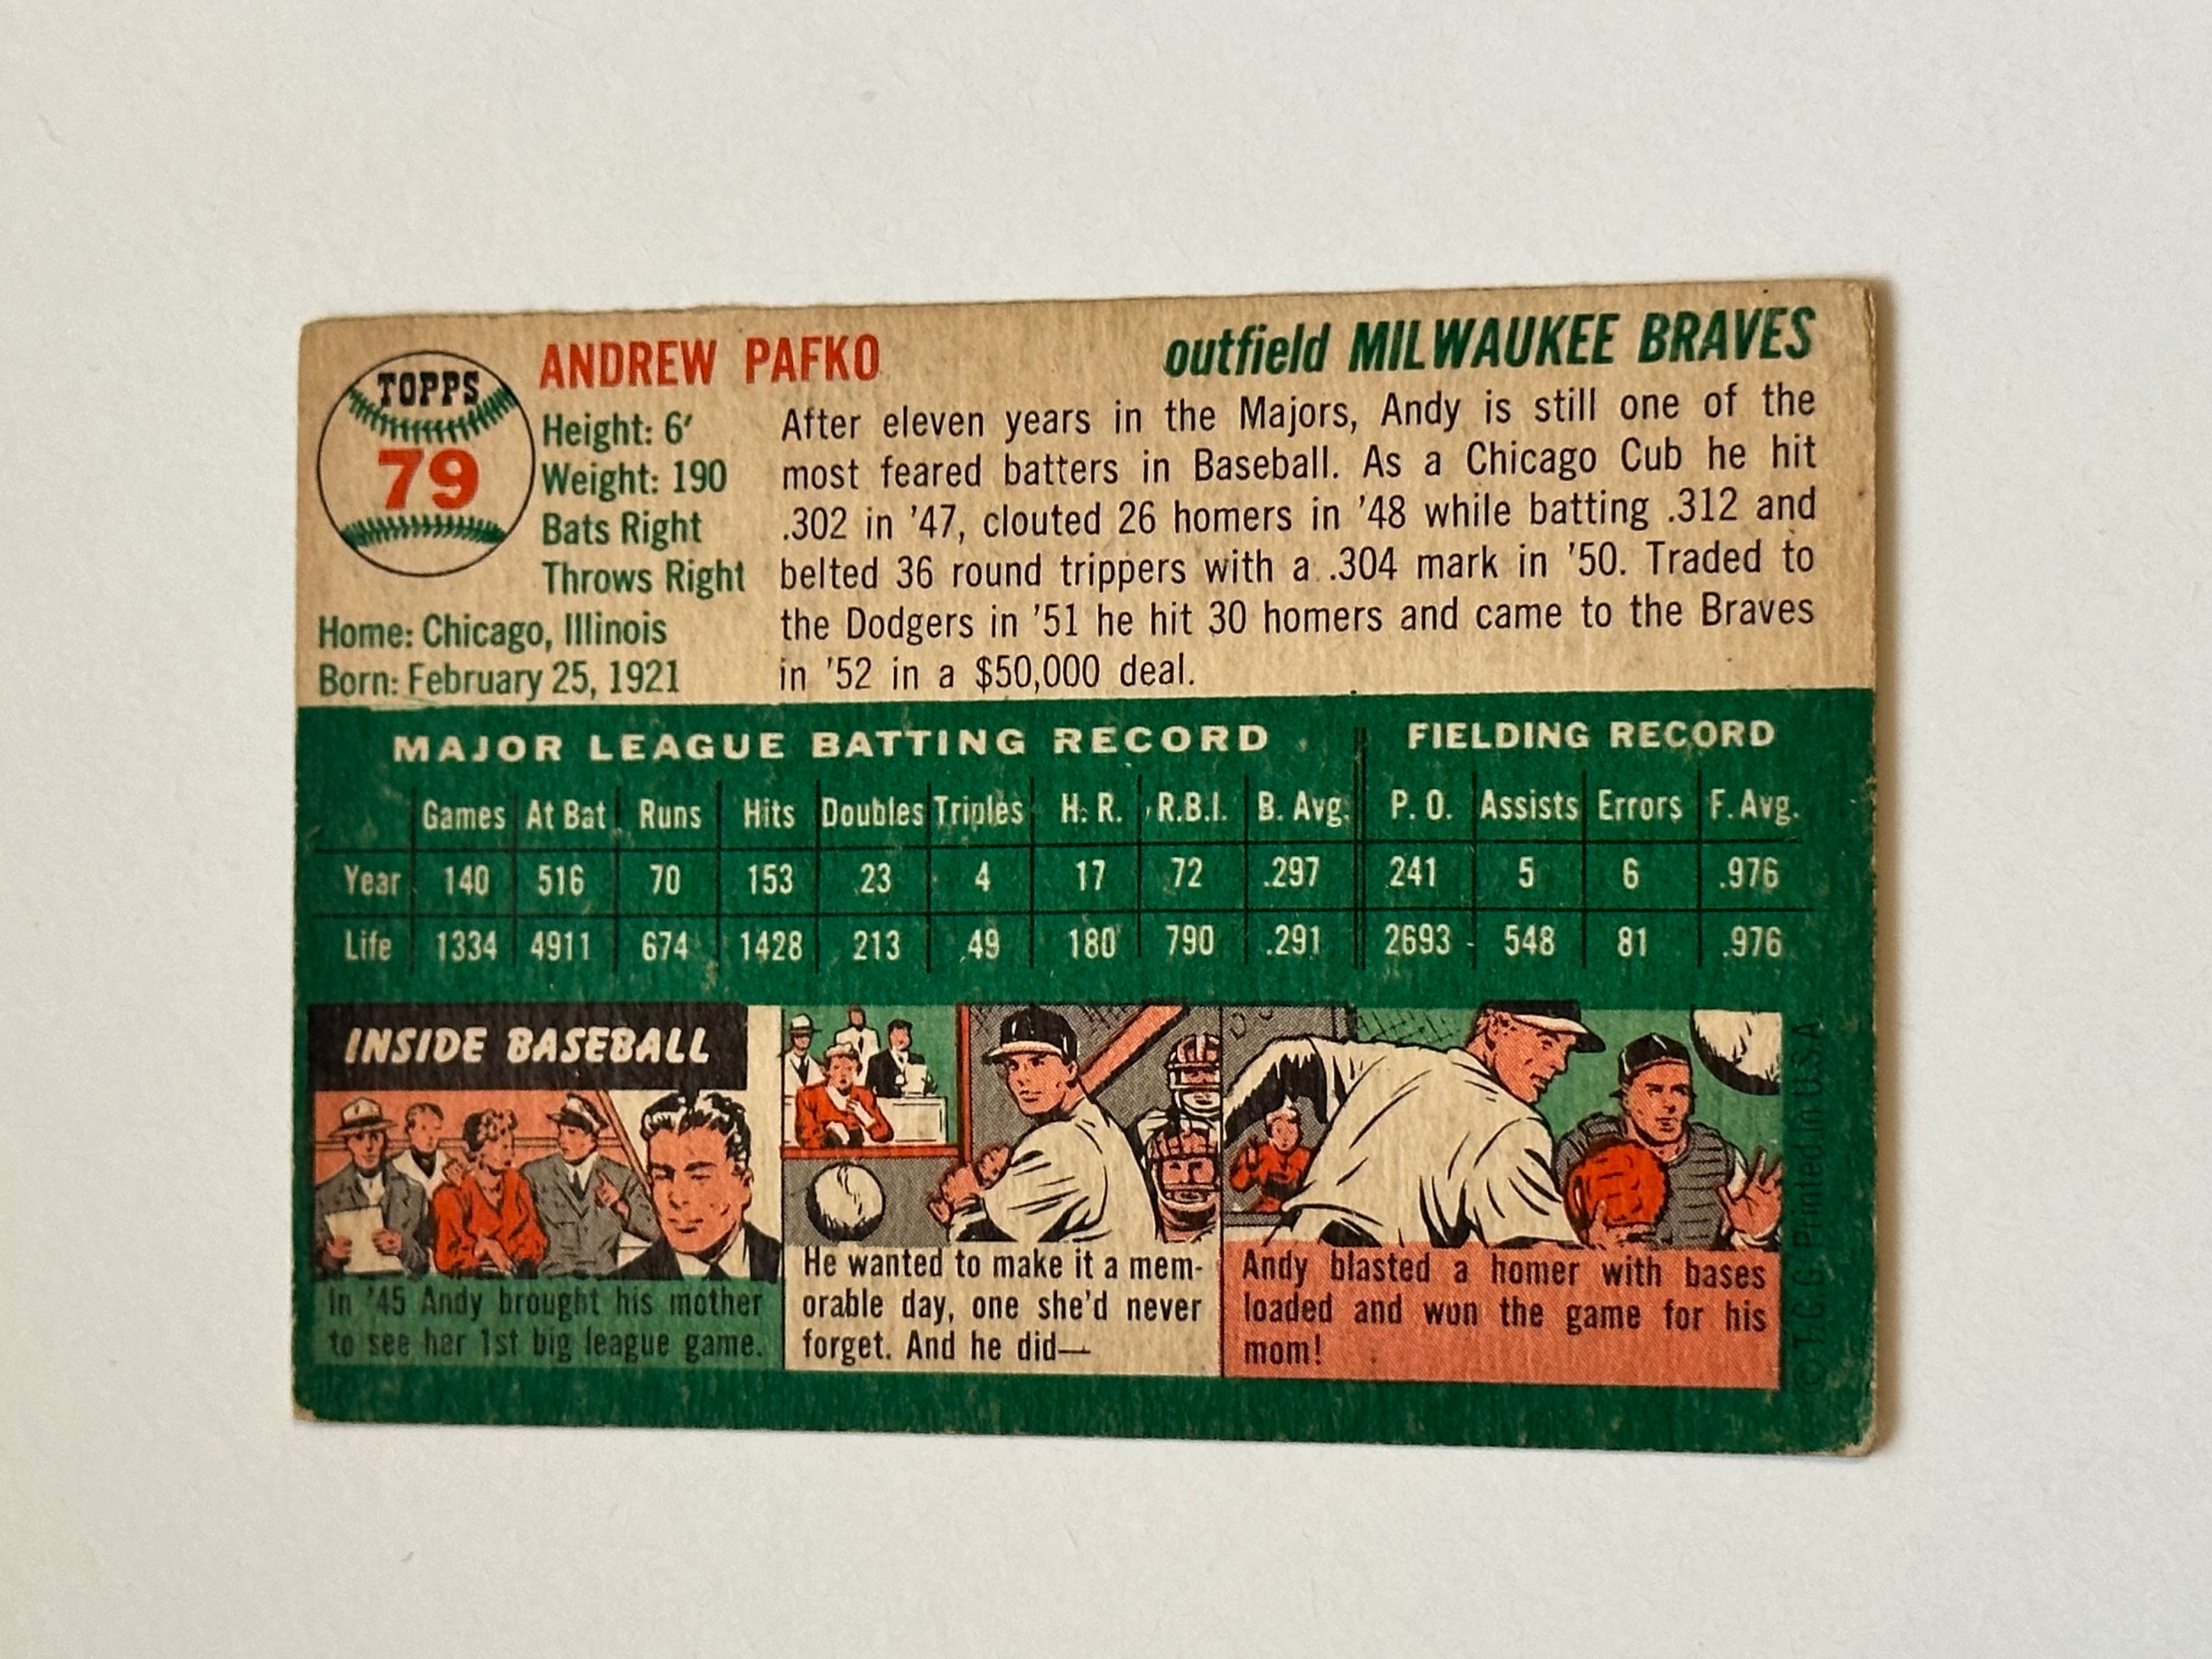 1954 Topps Andy Pafco baseball card